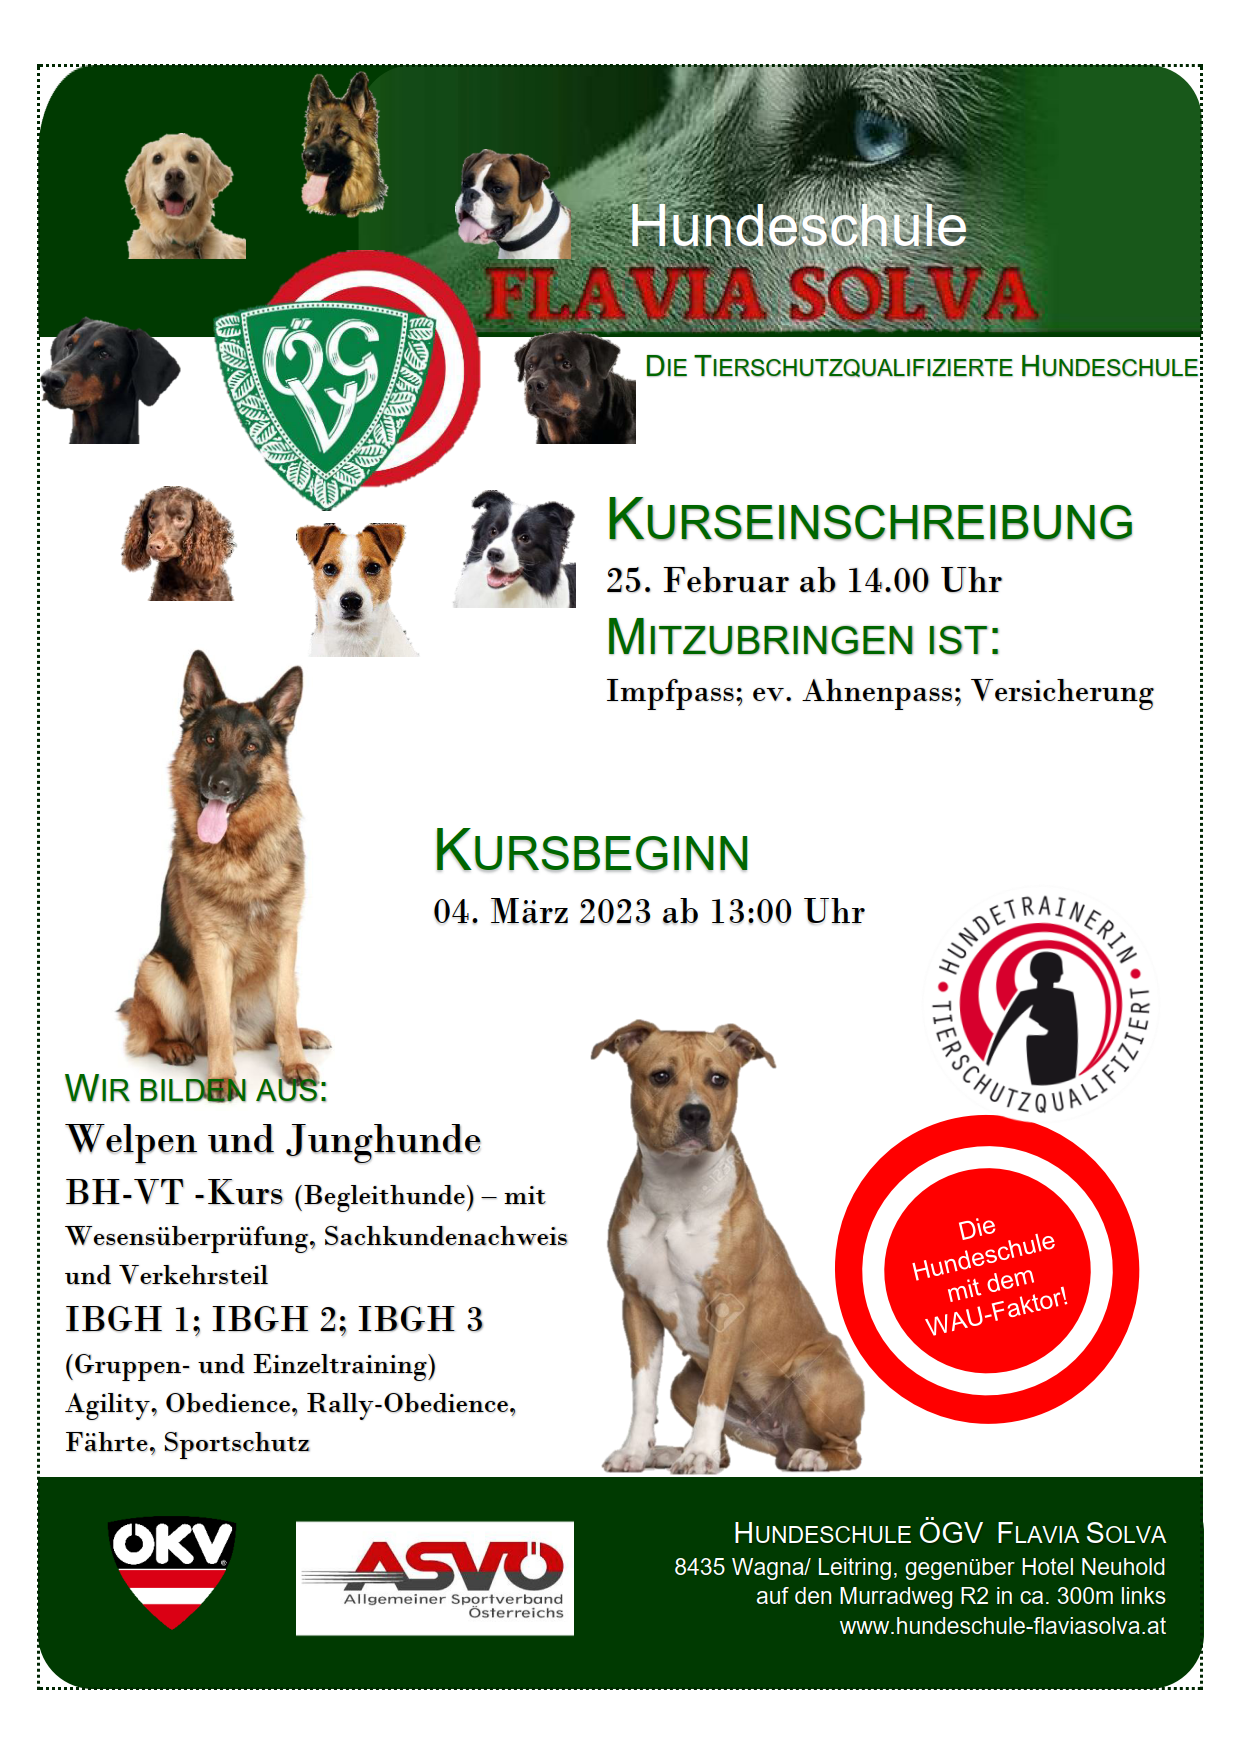 Hundeschule-Flavia-Solva-Plakat_2023_1